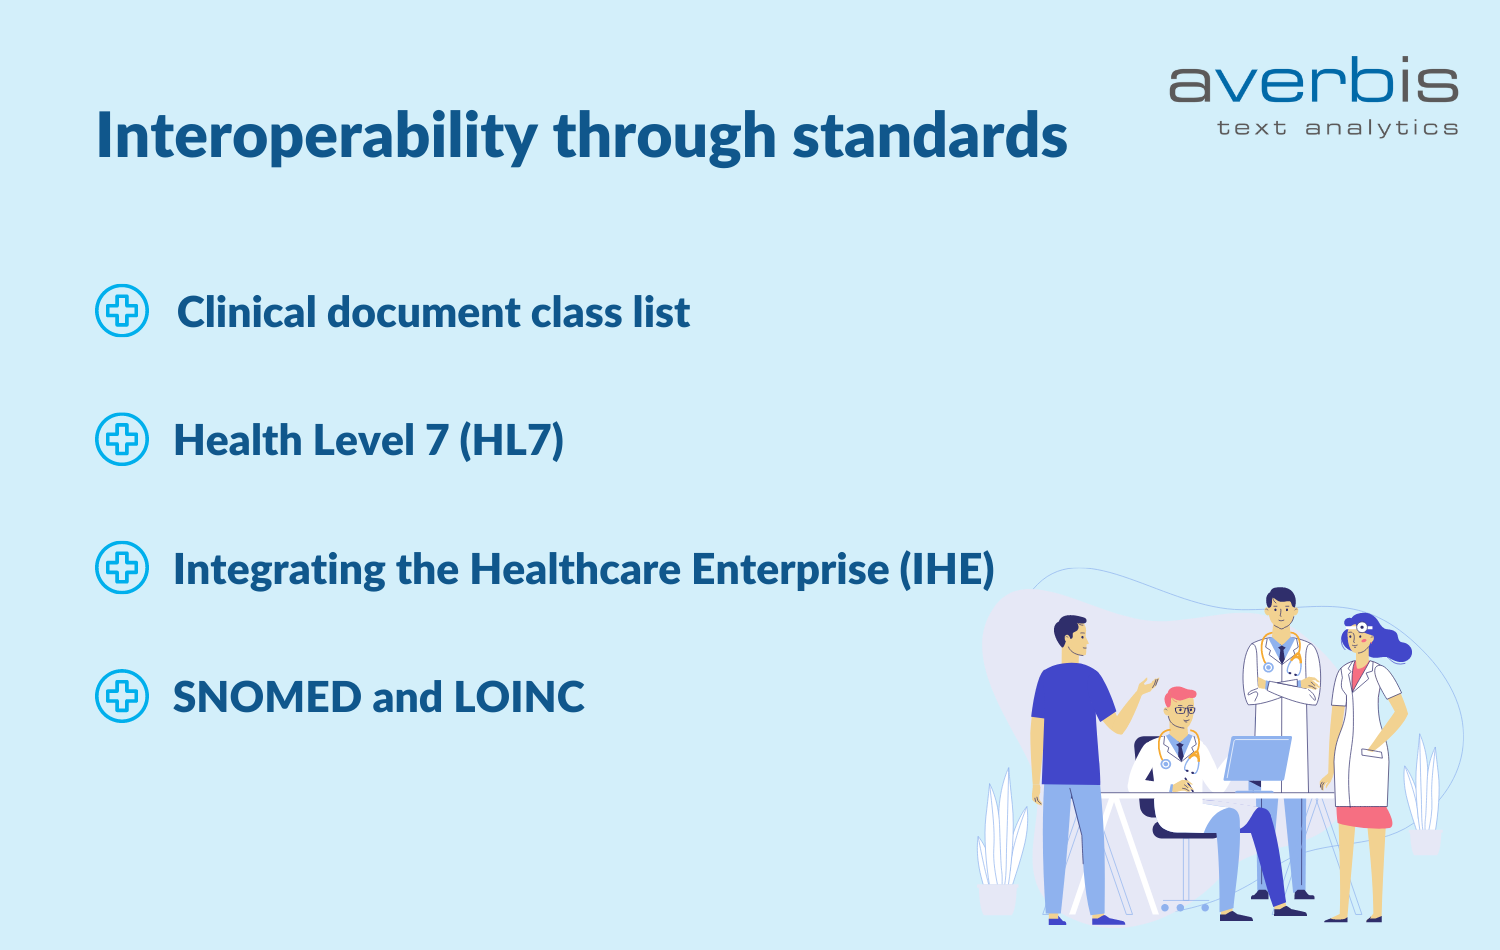 Interoperability in healthcare through standards @Averbis